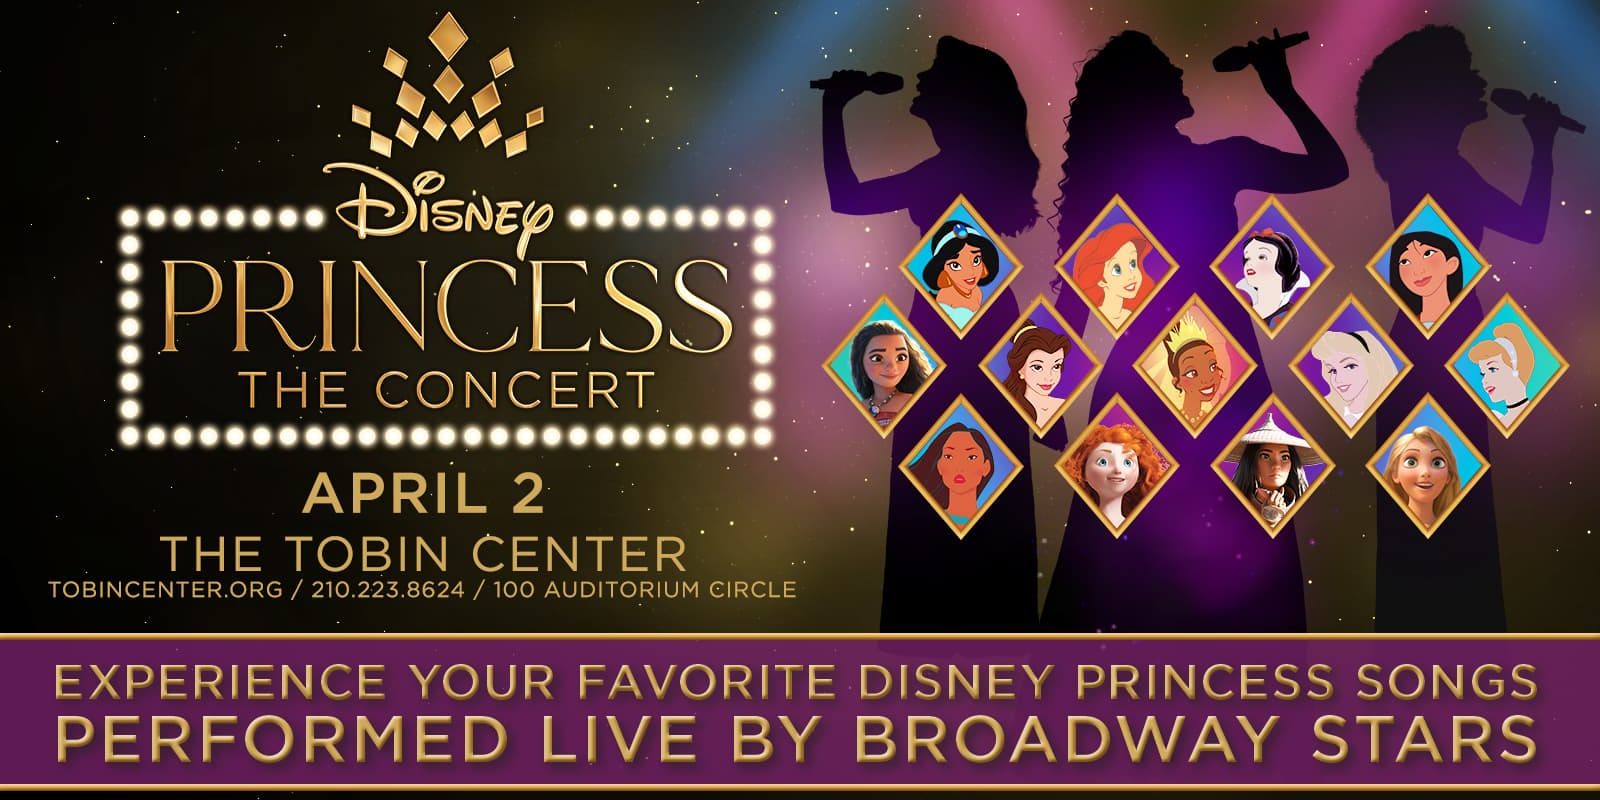 Disney Princess - The Concert promotional image